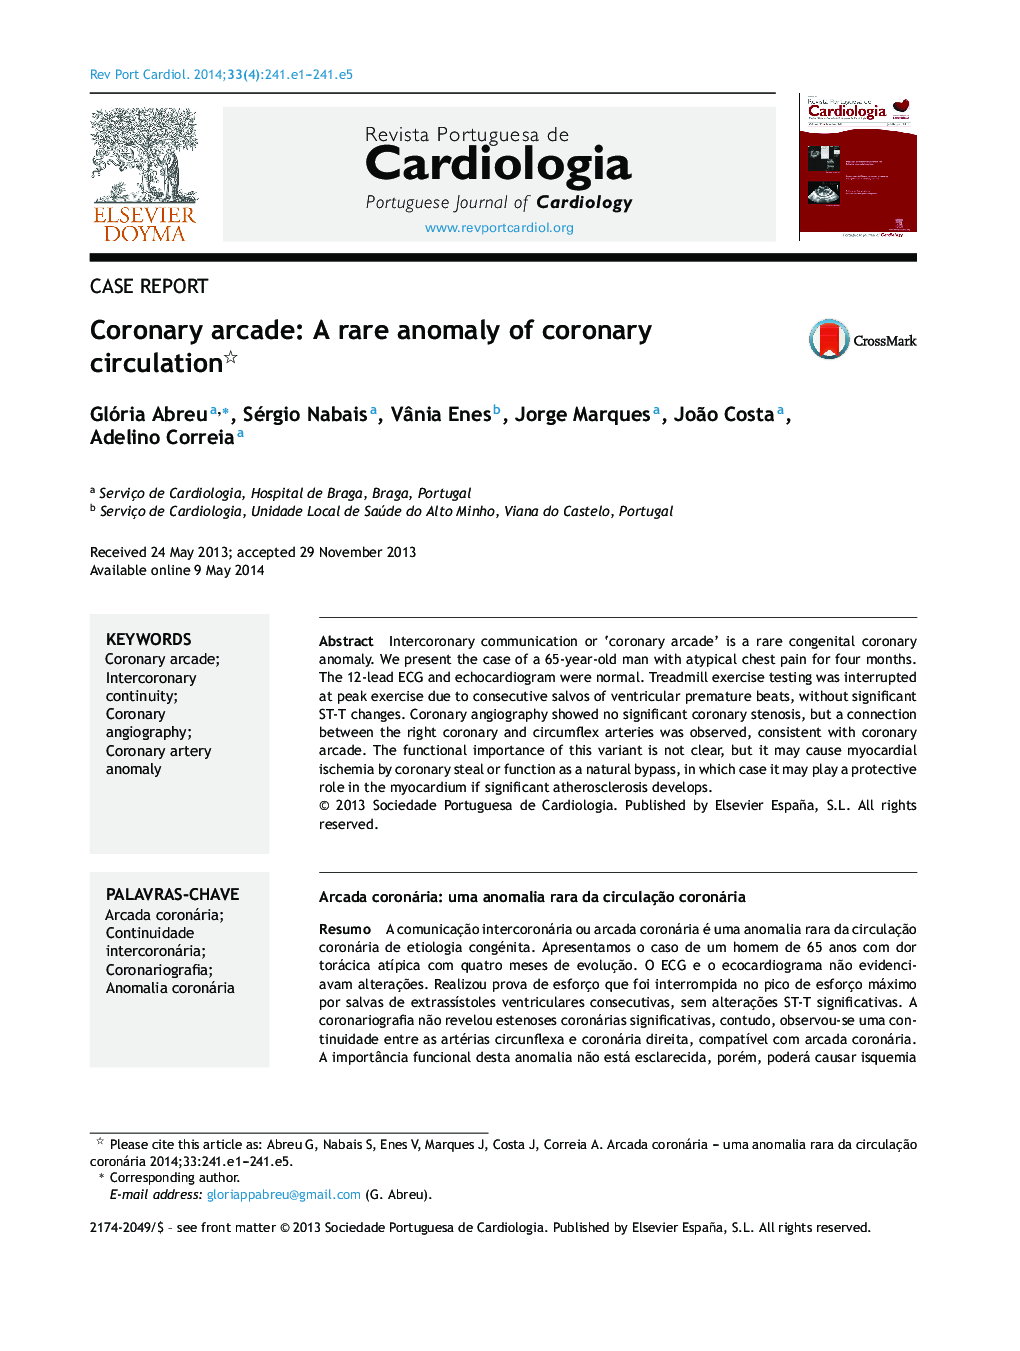 Coronary arcade: A rare anomaly of coronary circulation